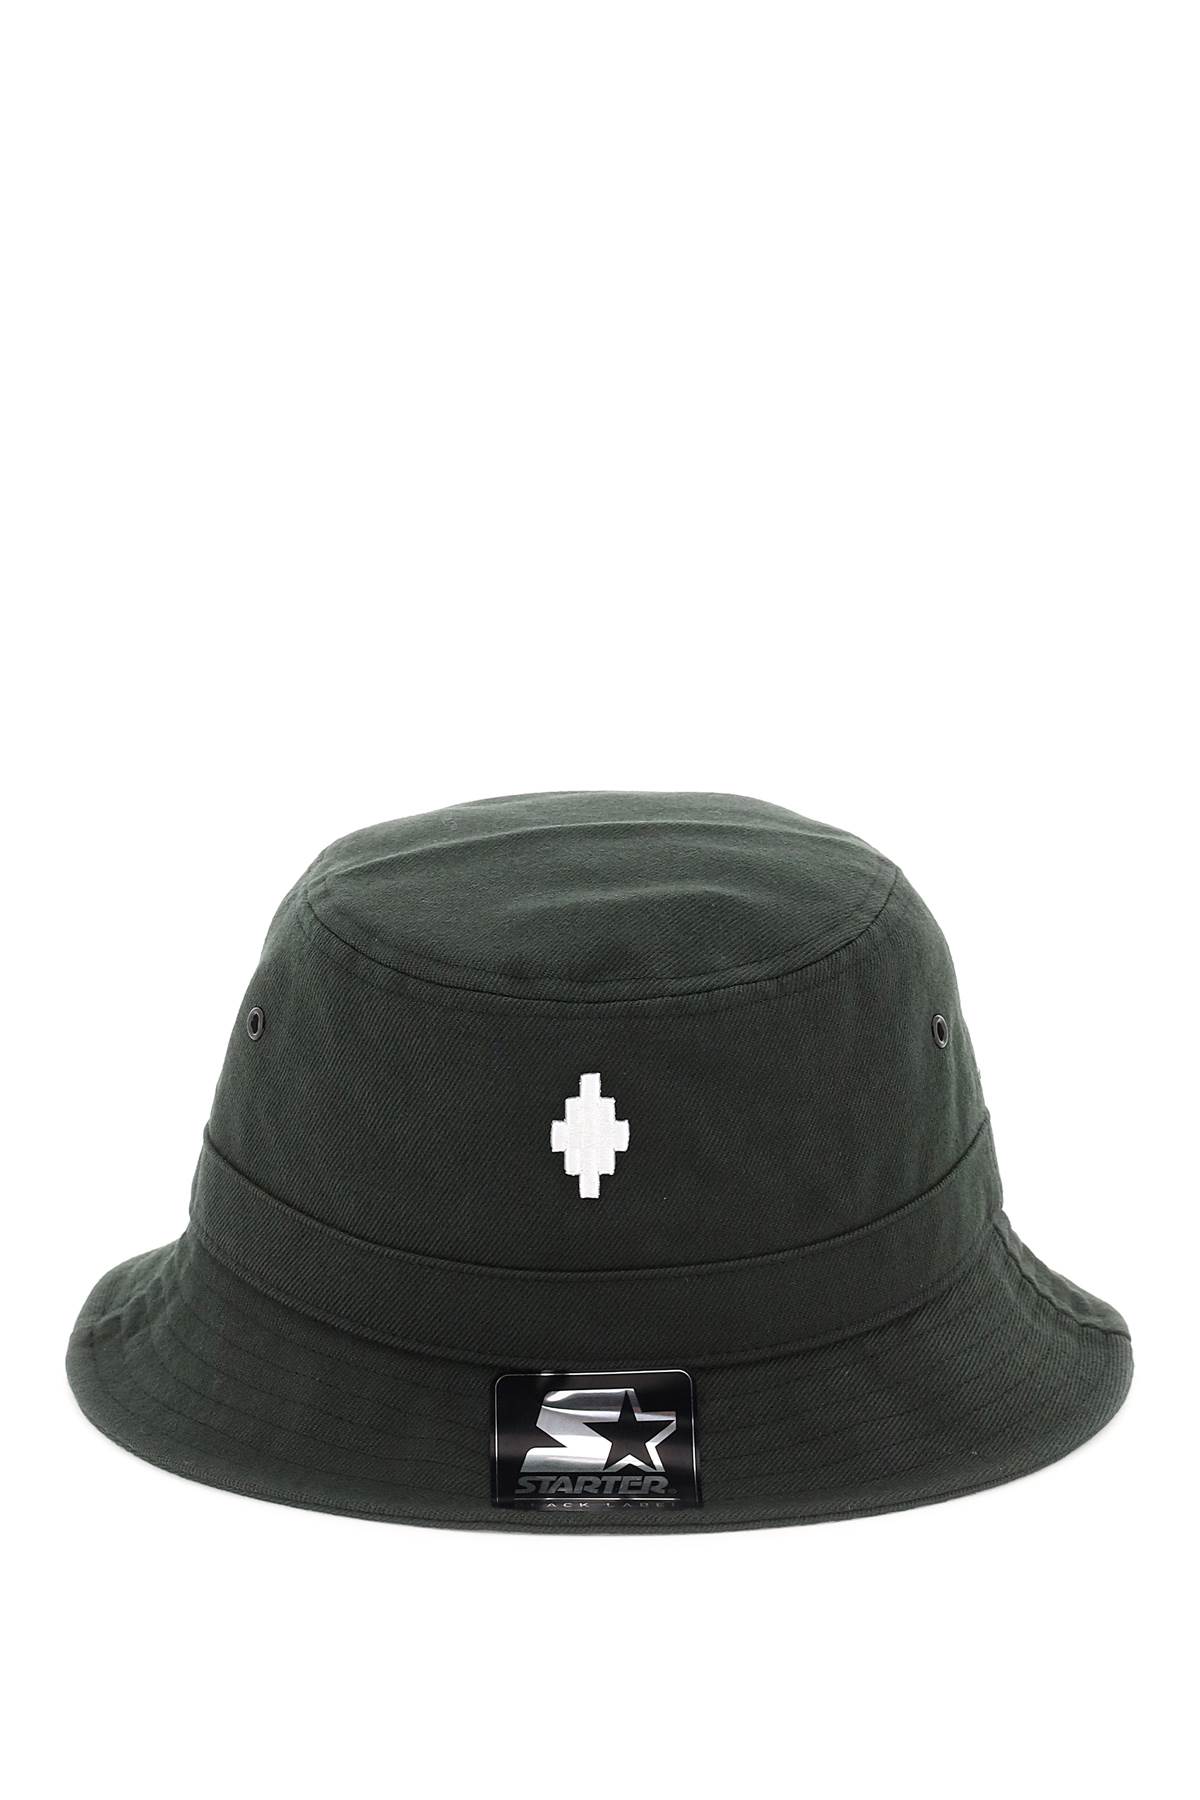 Starter Cross Bucket Hat